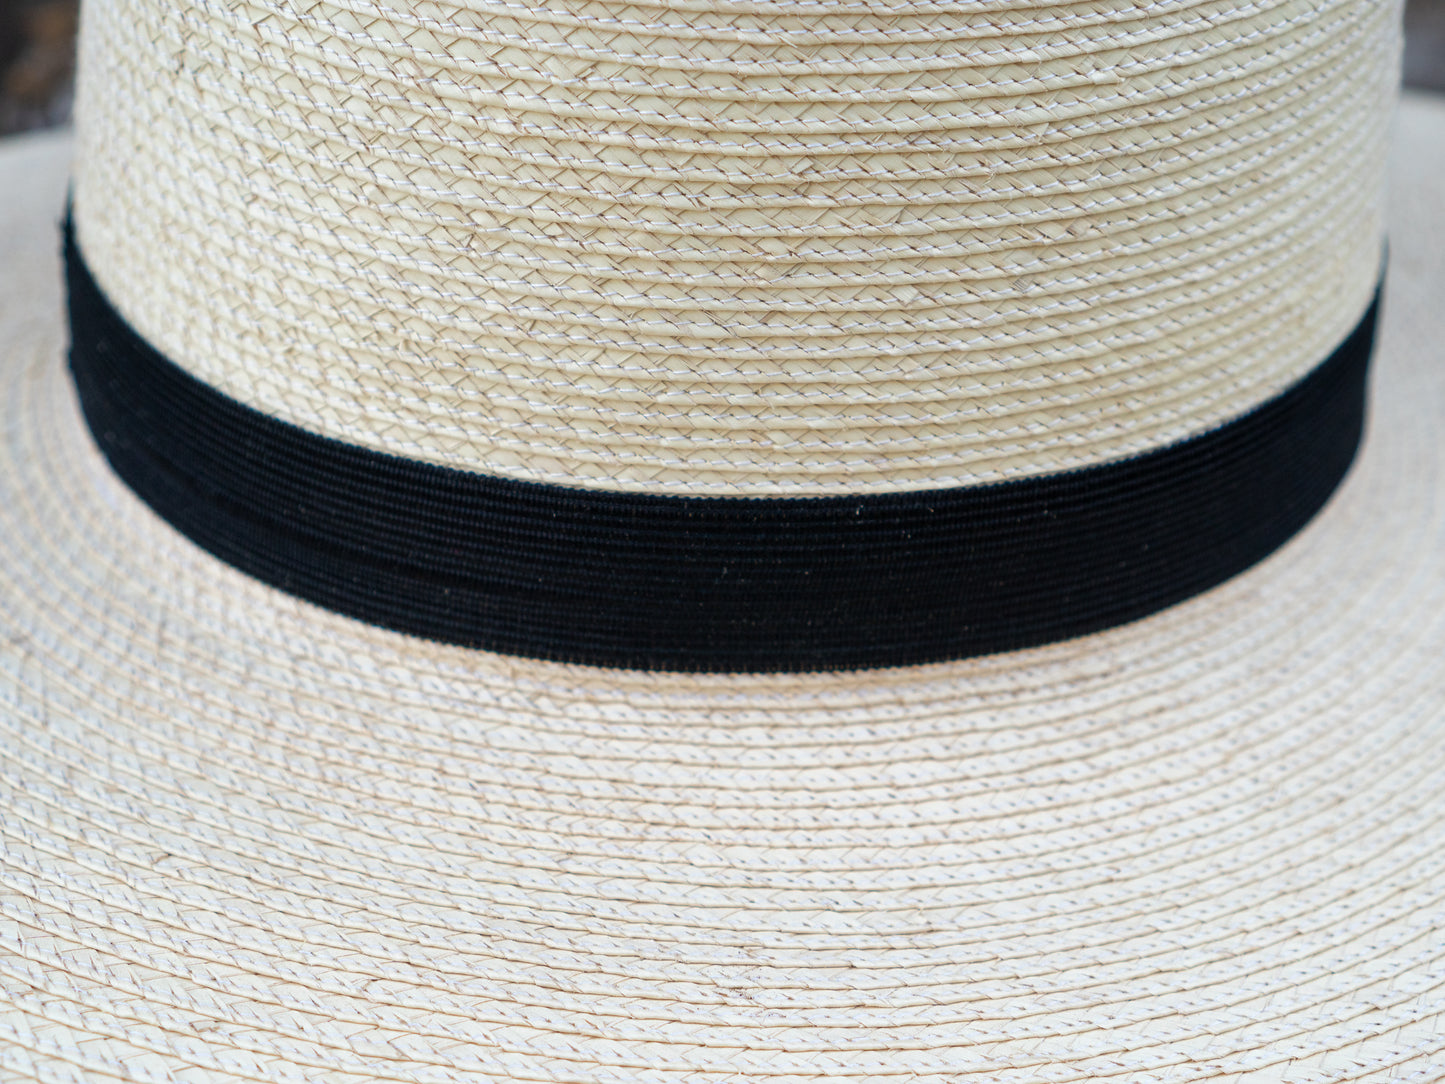 SunBody Hats Tophat Palm Leaf Hat Open Crown Tan